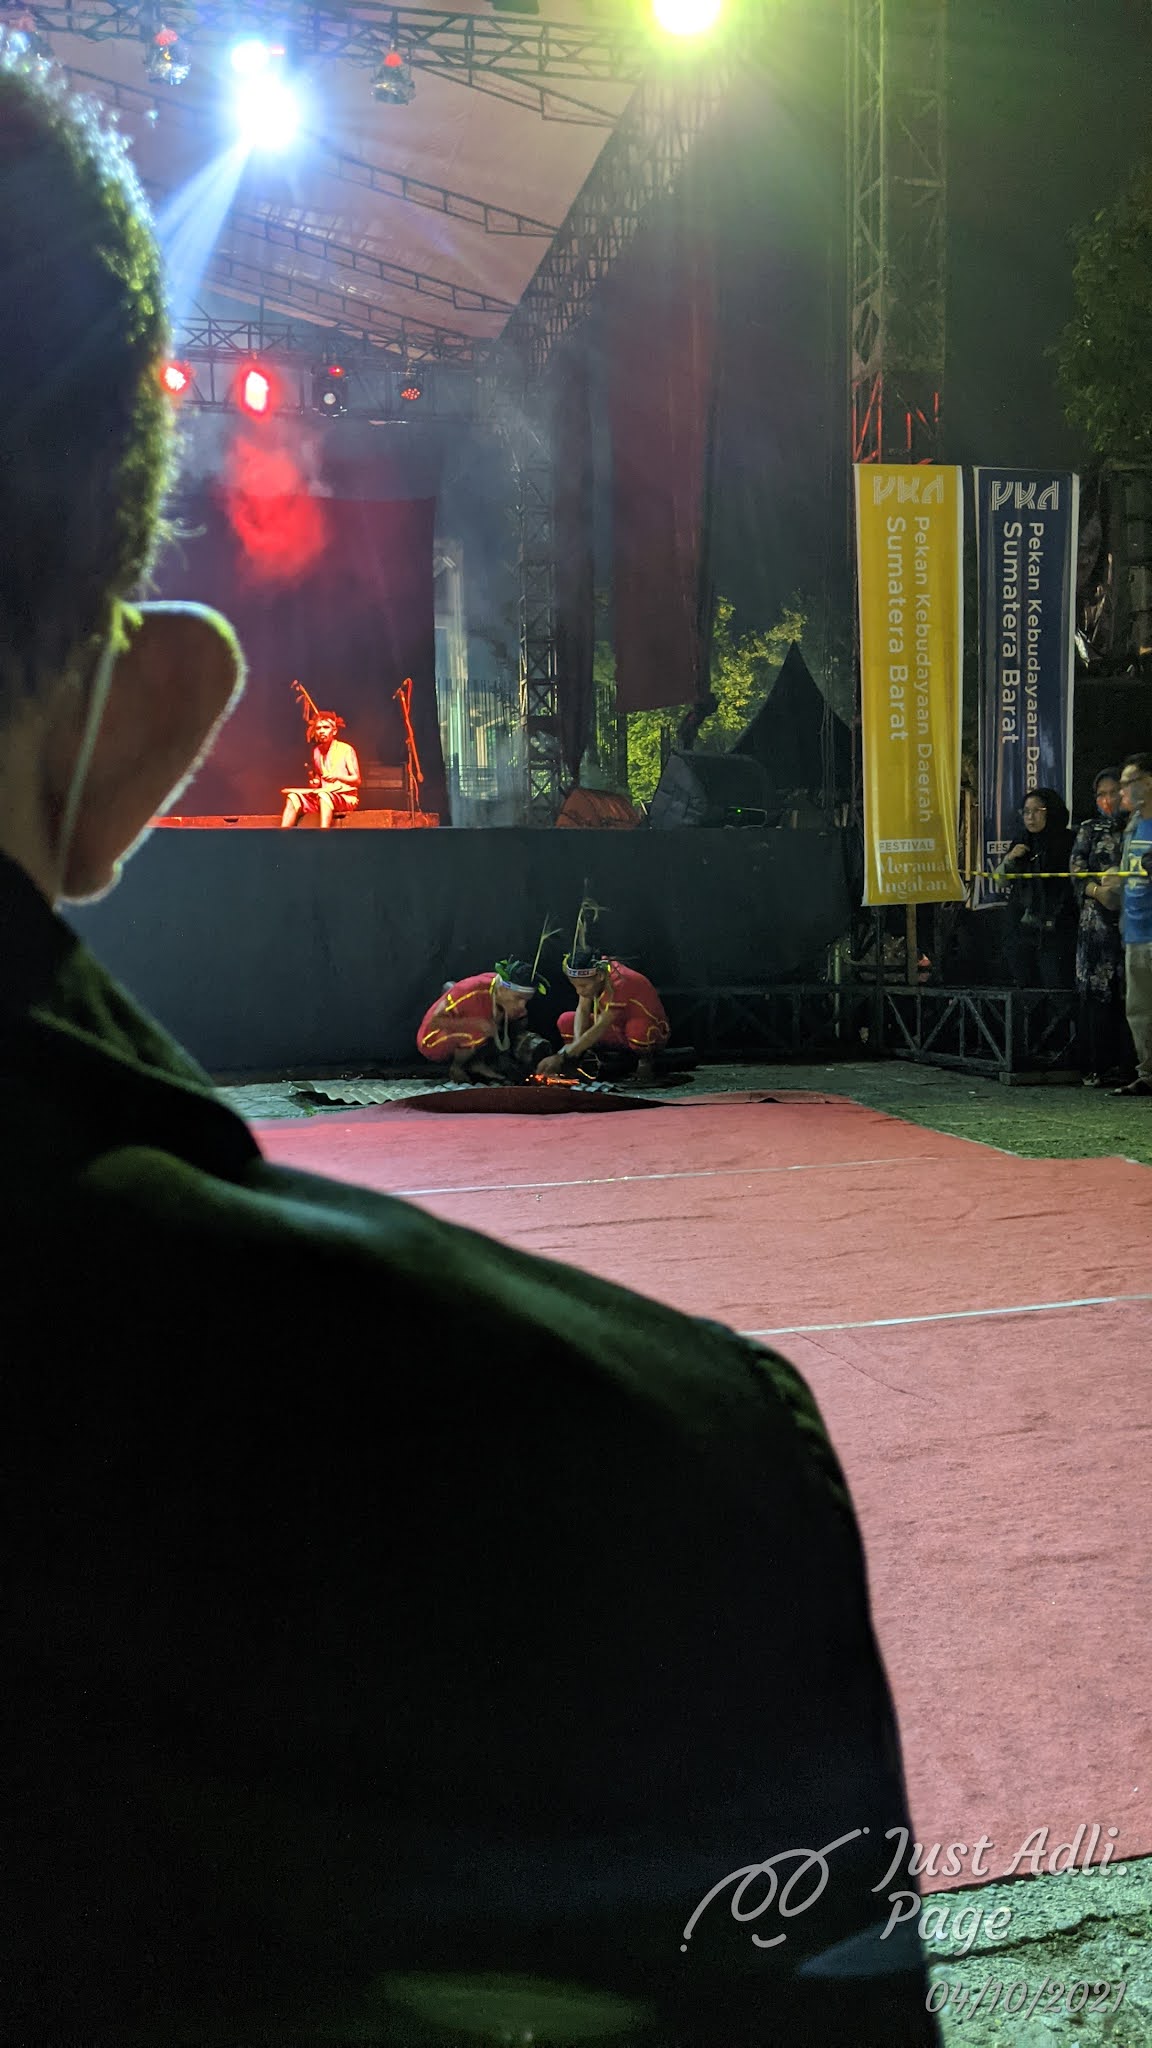 Dua dari tiga pemusik sedang membakar sesuatu, sembari dua pemain lainnya melakukan suatu kegiatan di tengah-tengah pertunjukan.